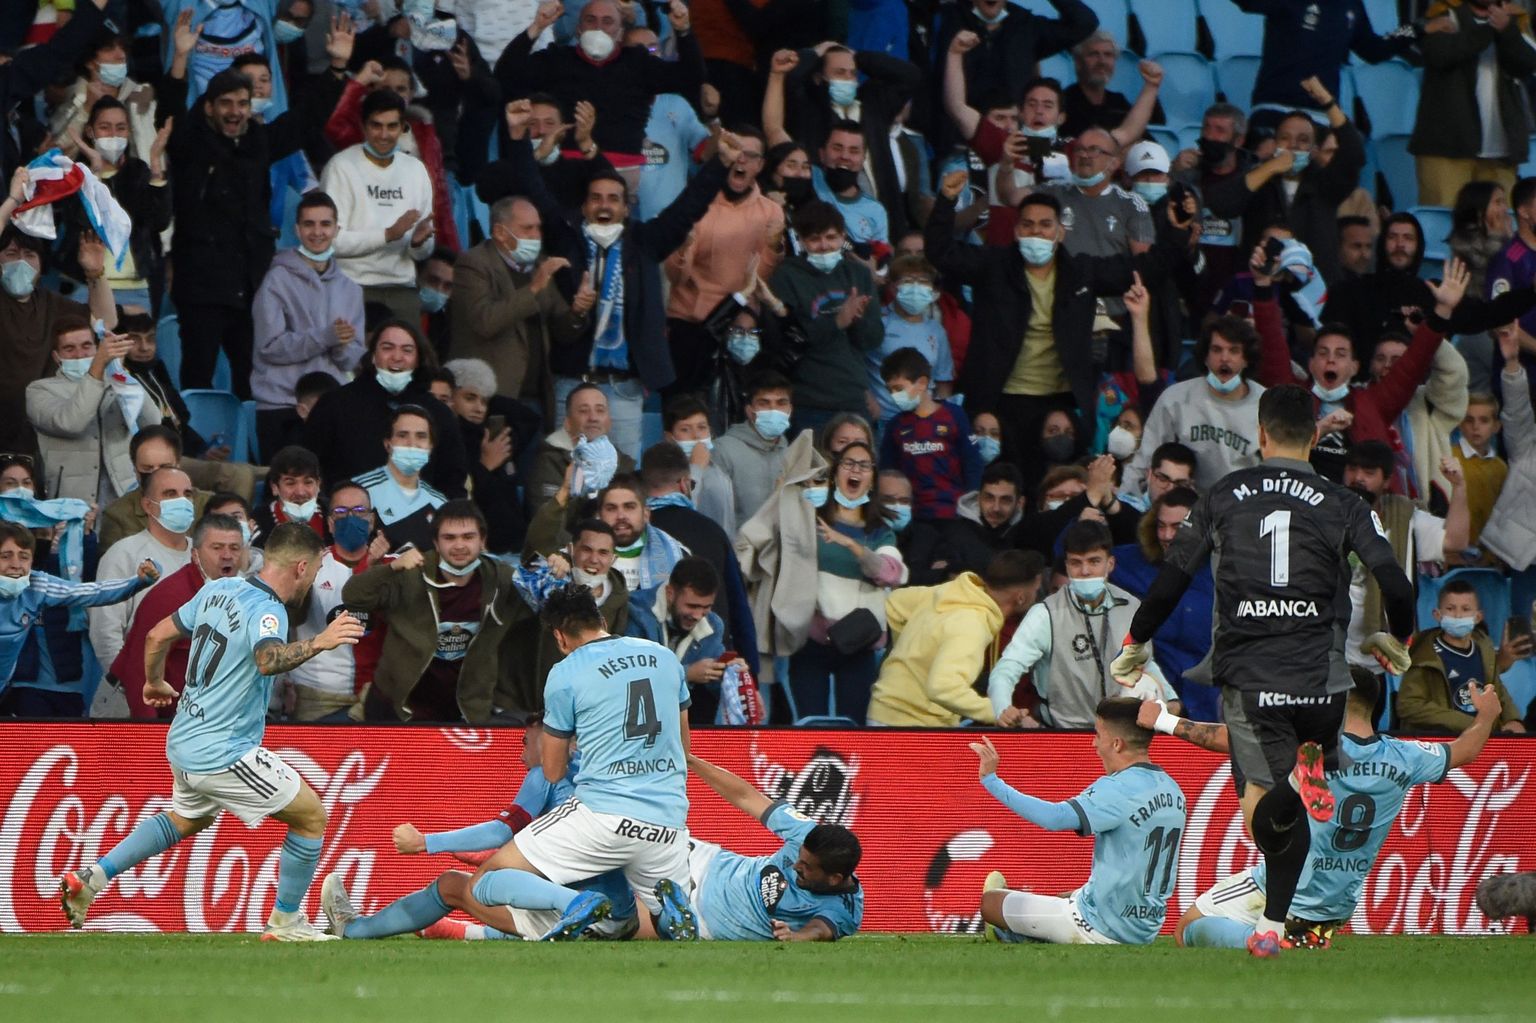 Celta Vigo mängijaid magusat väravat tähistamas.